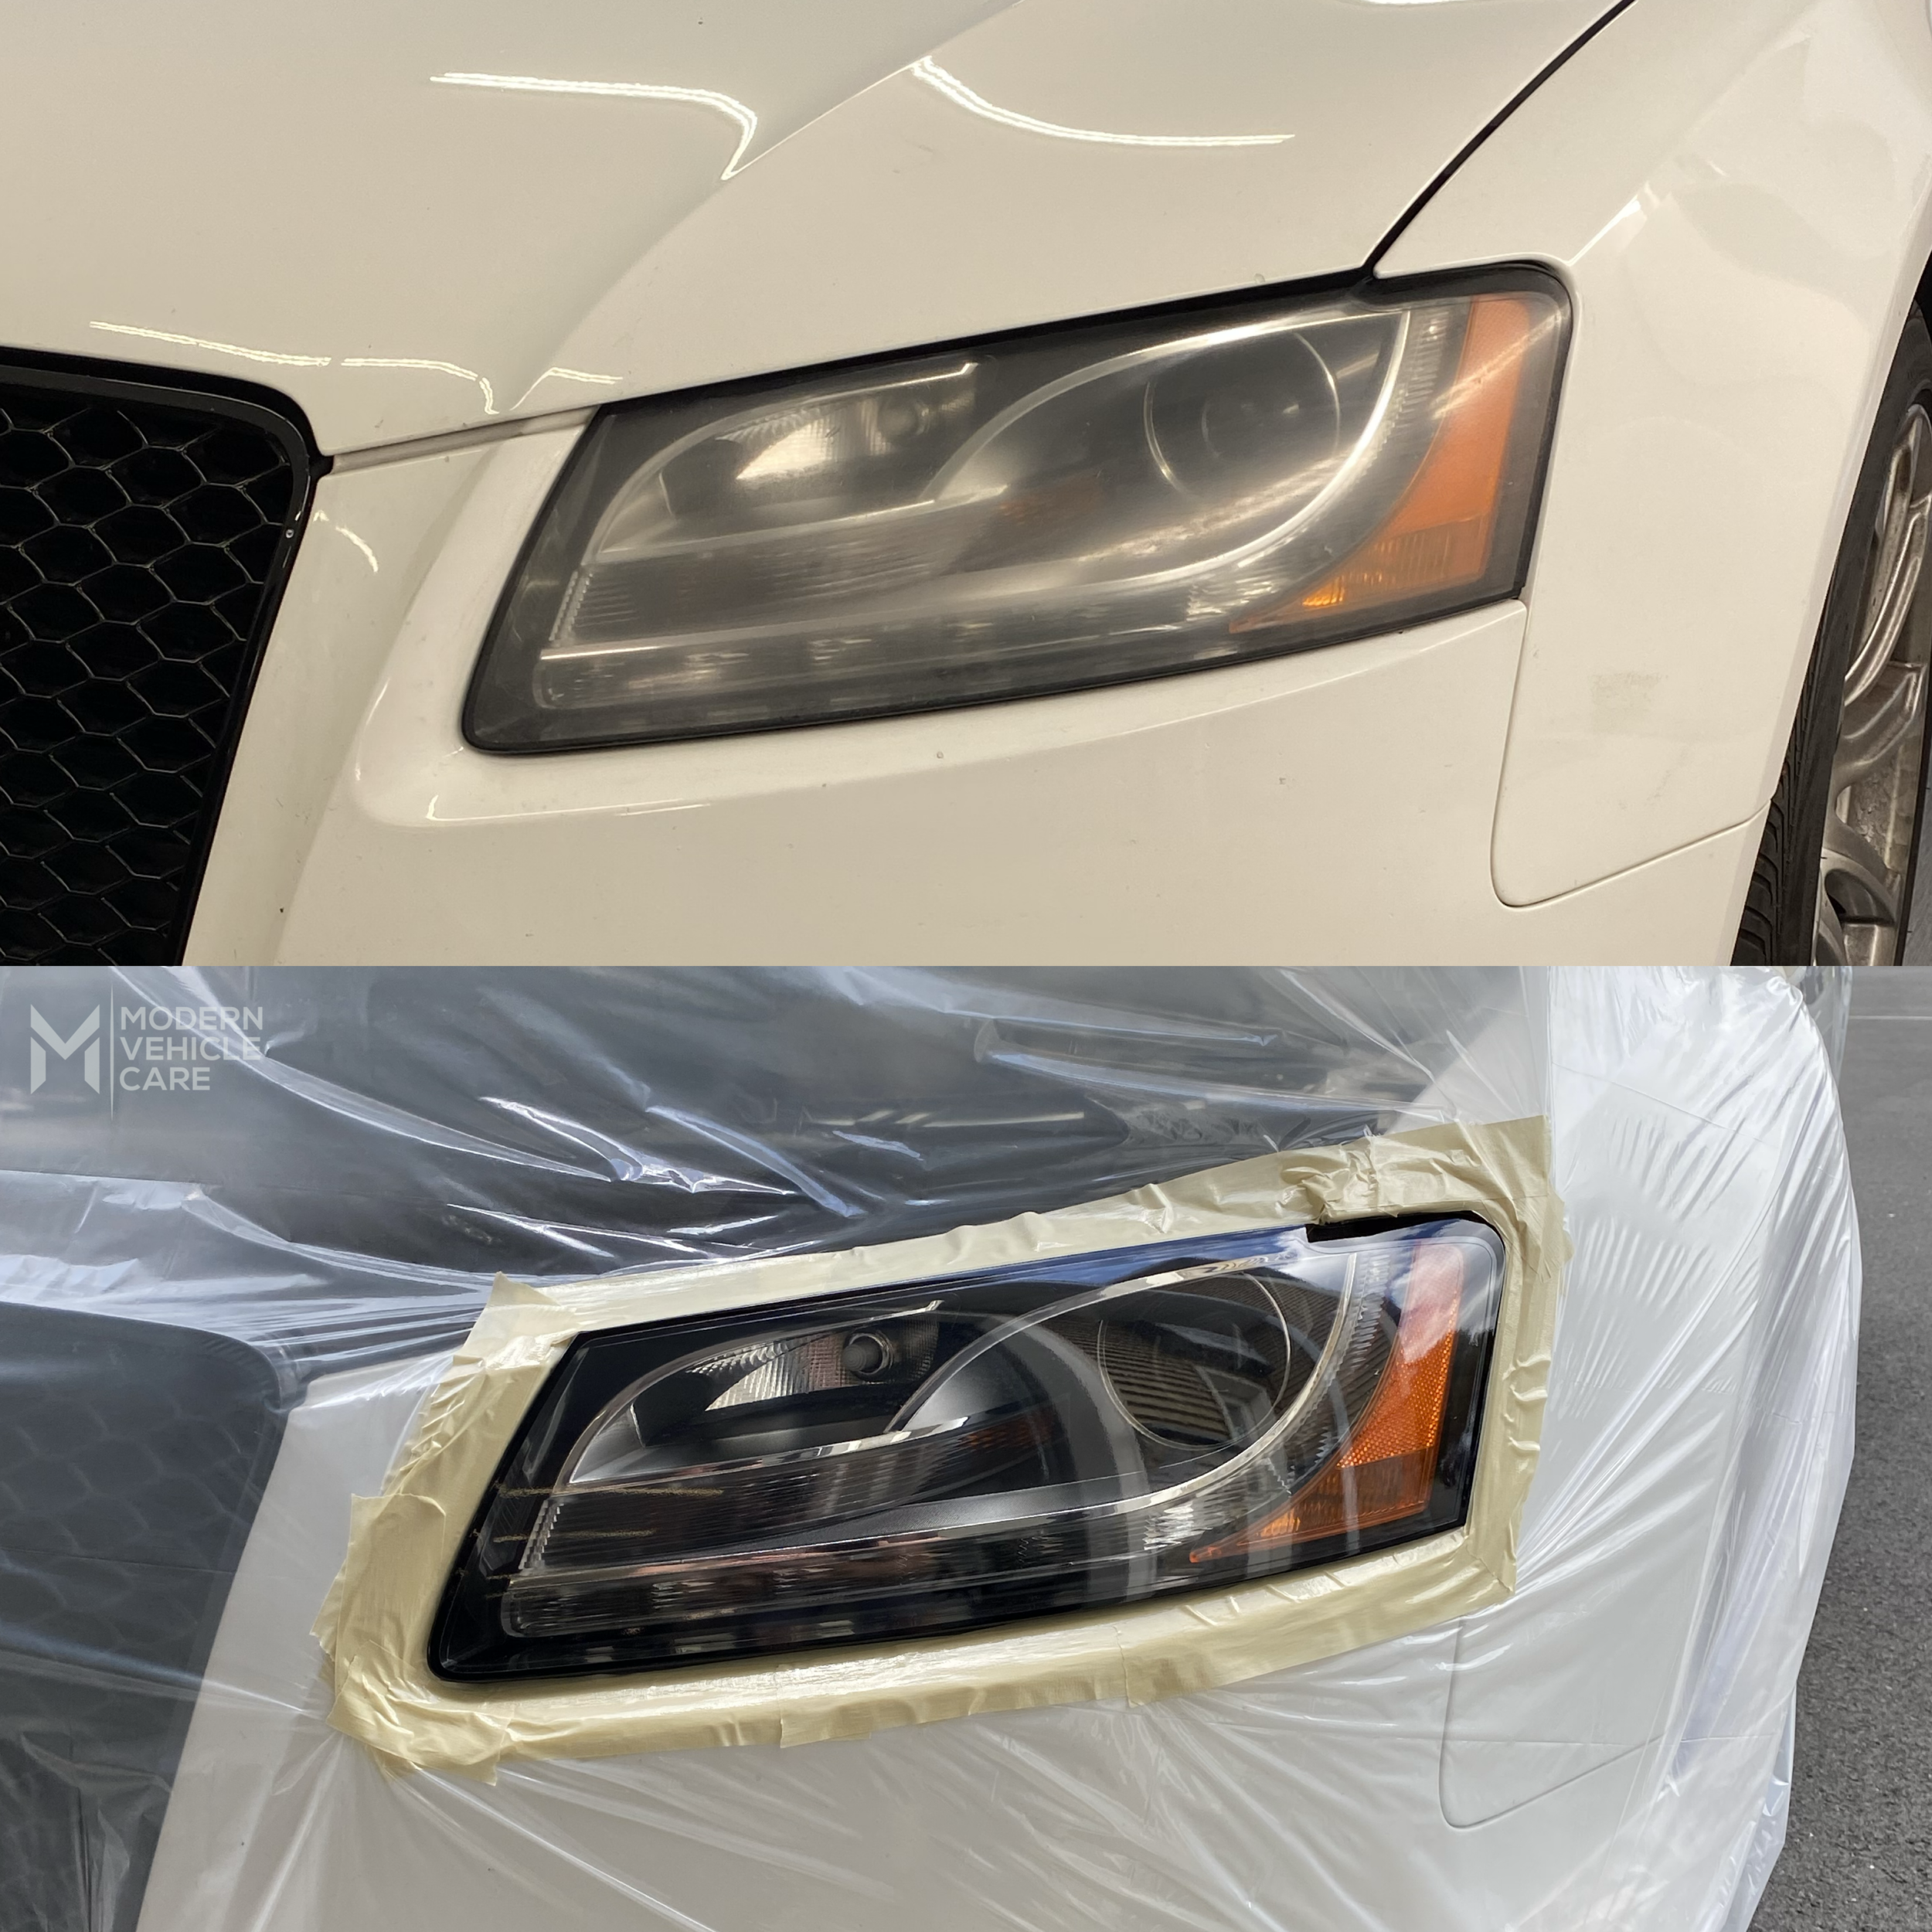 Audi A5 Headlight Restoration.PNG